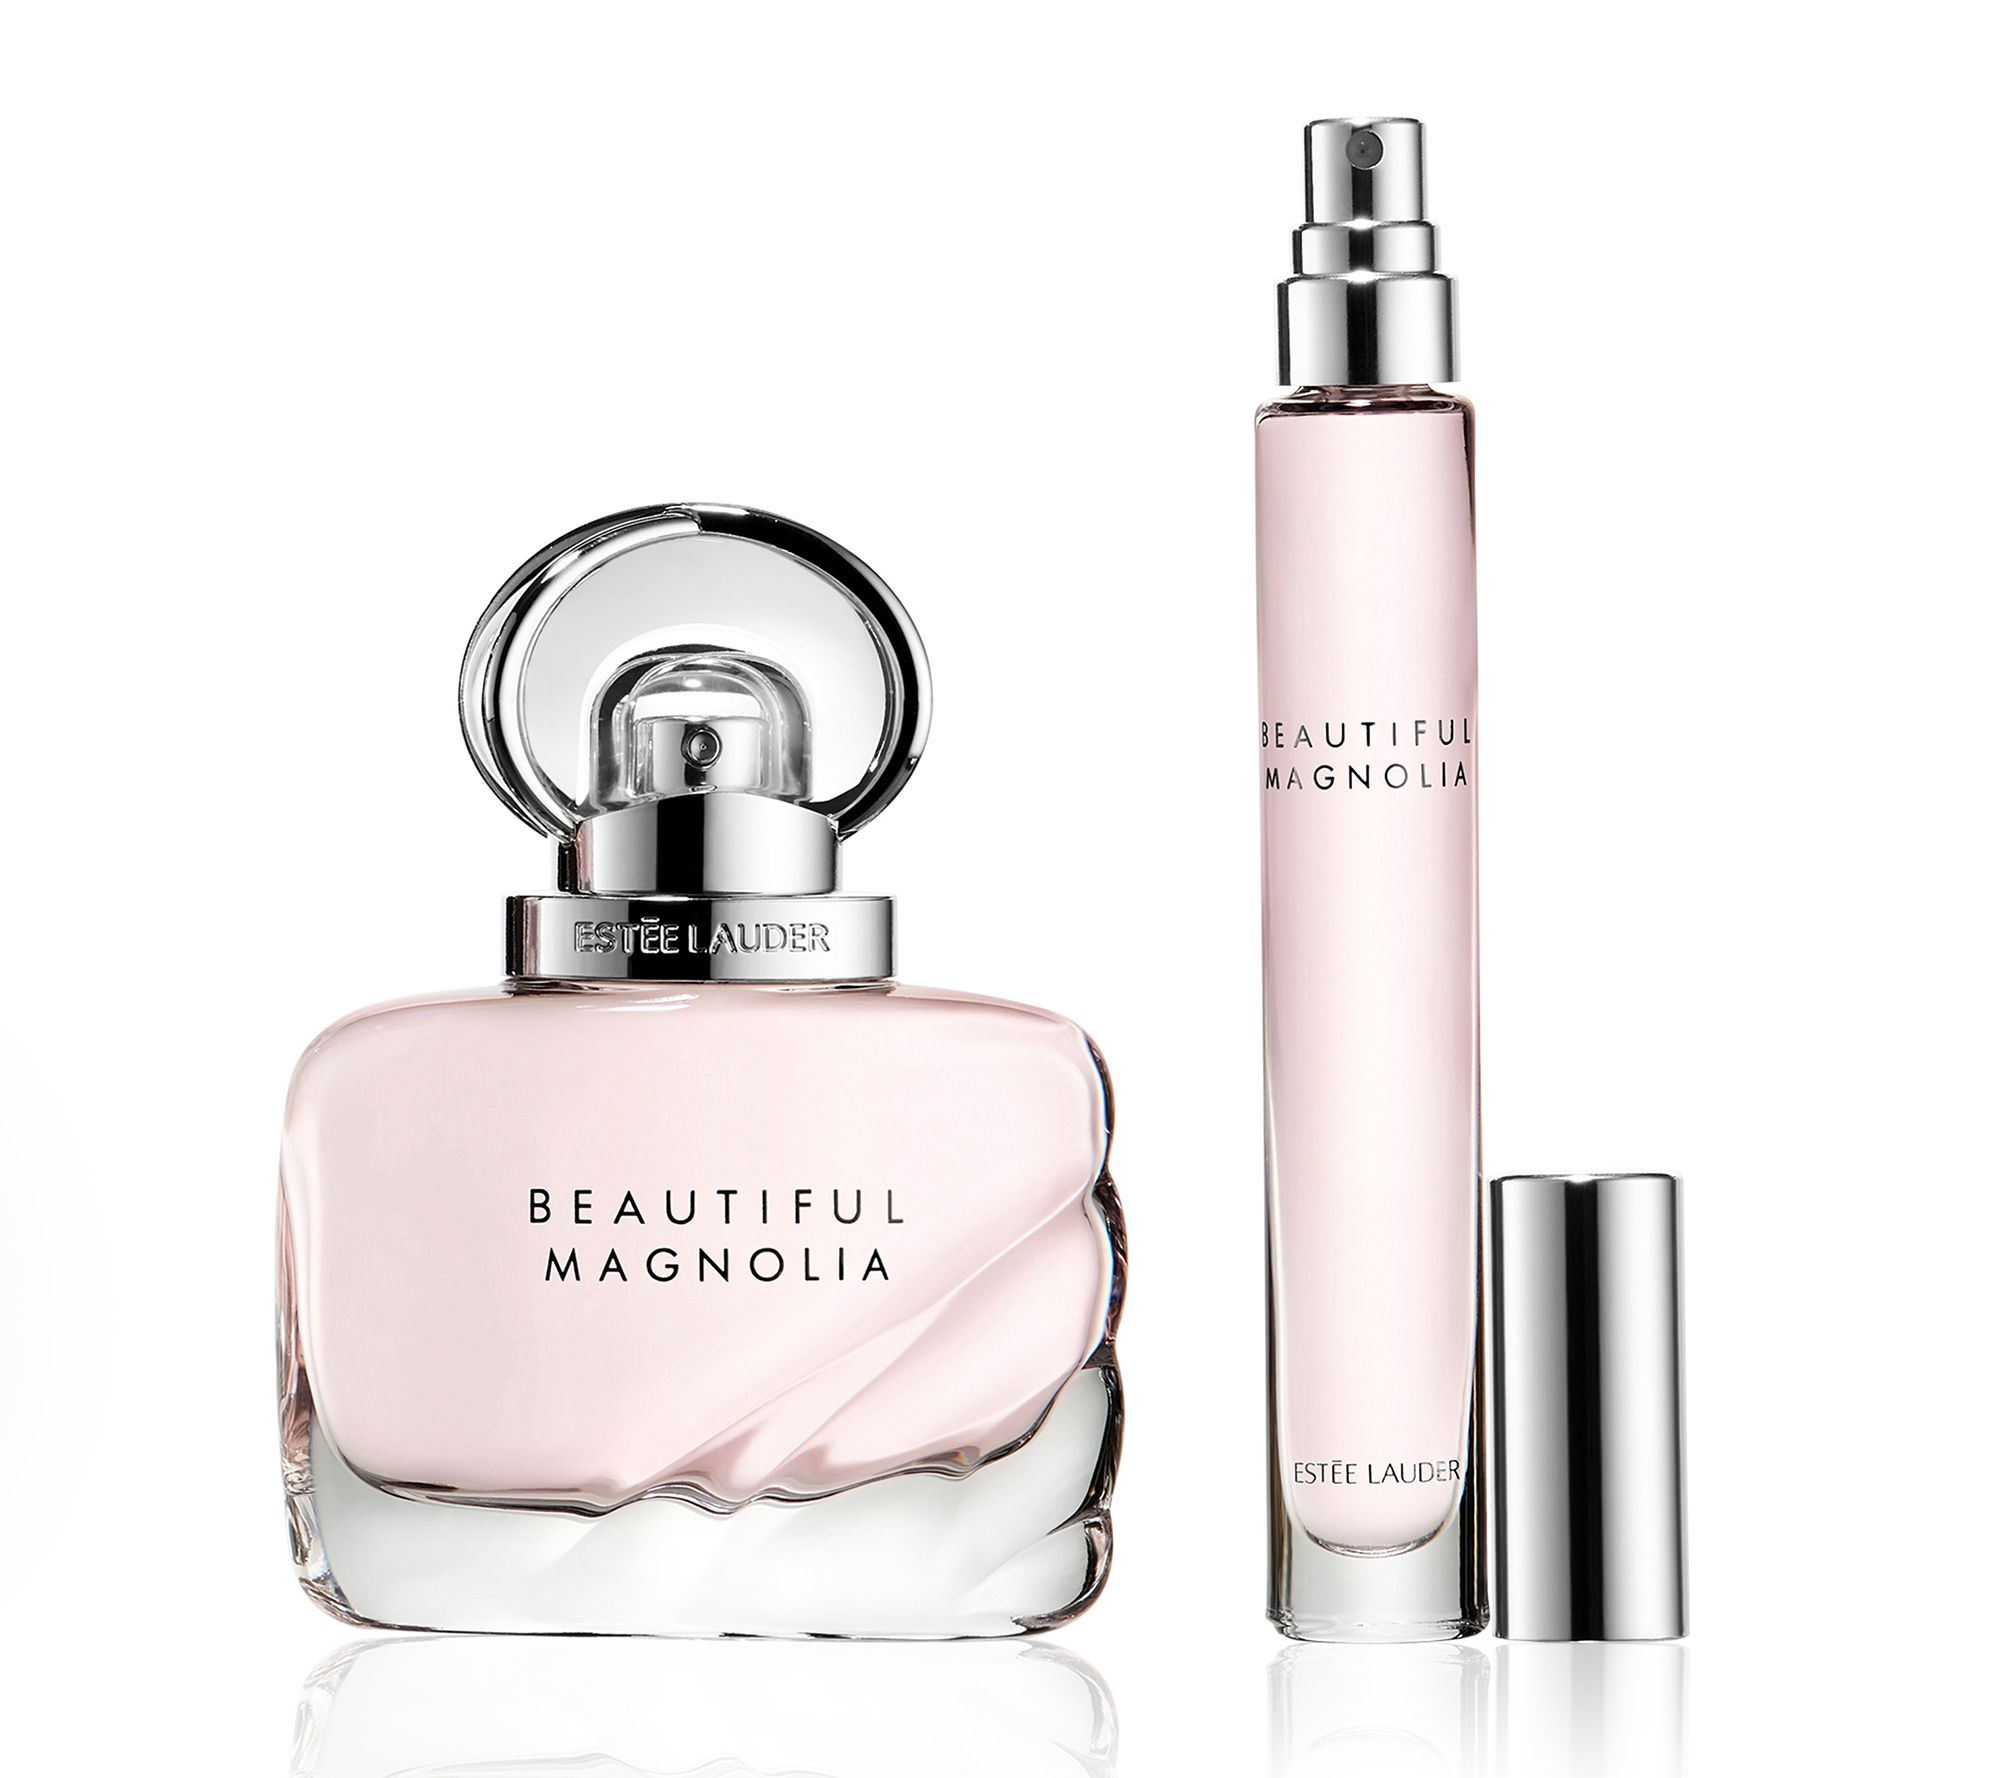 Estee Lauder Beautiful Magnolia Eau Parfum Home & Away Duo QVC.com